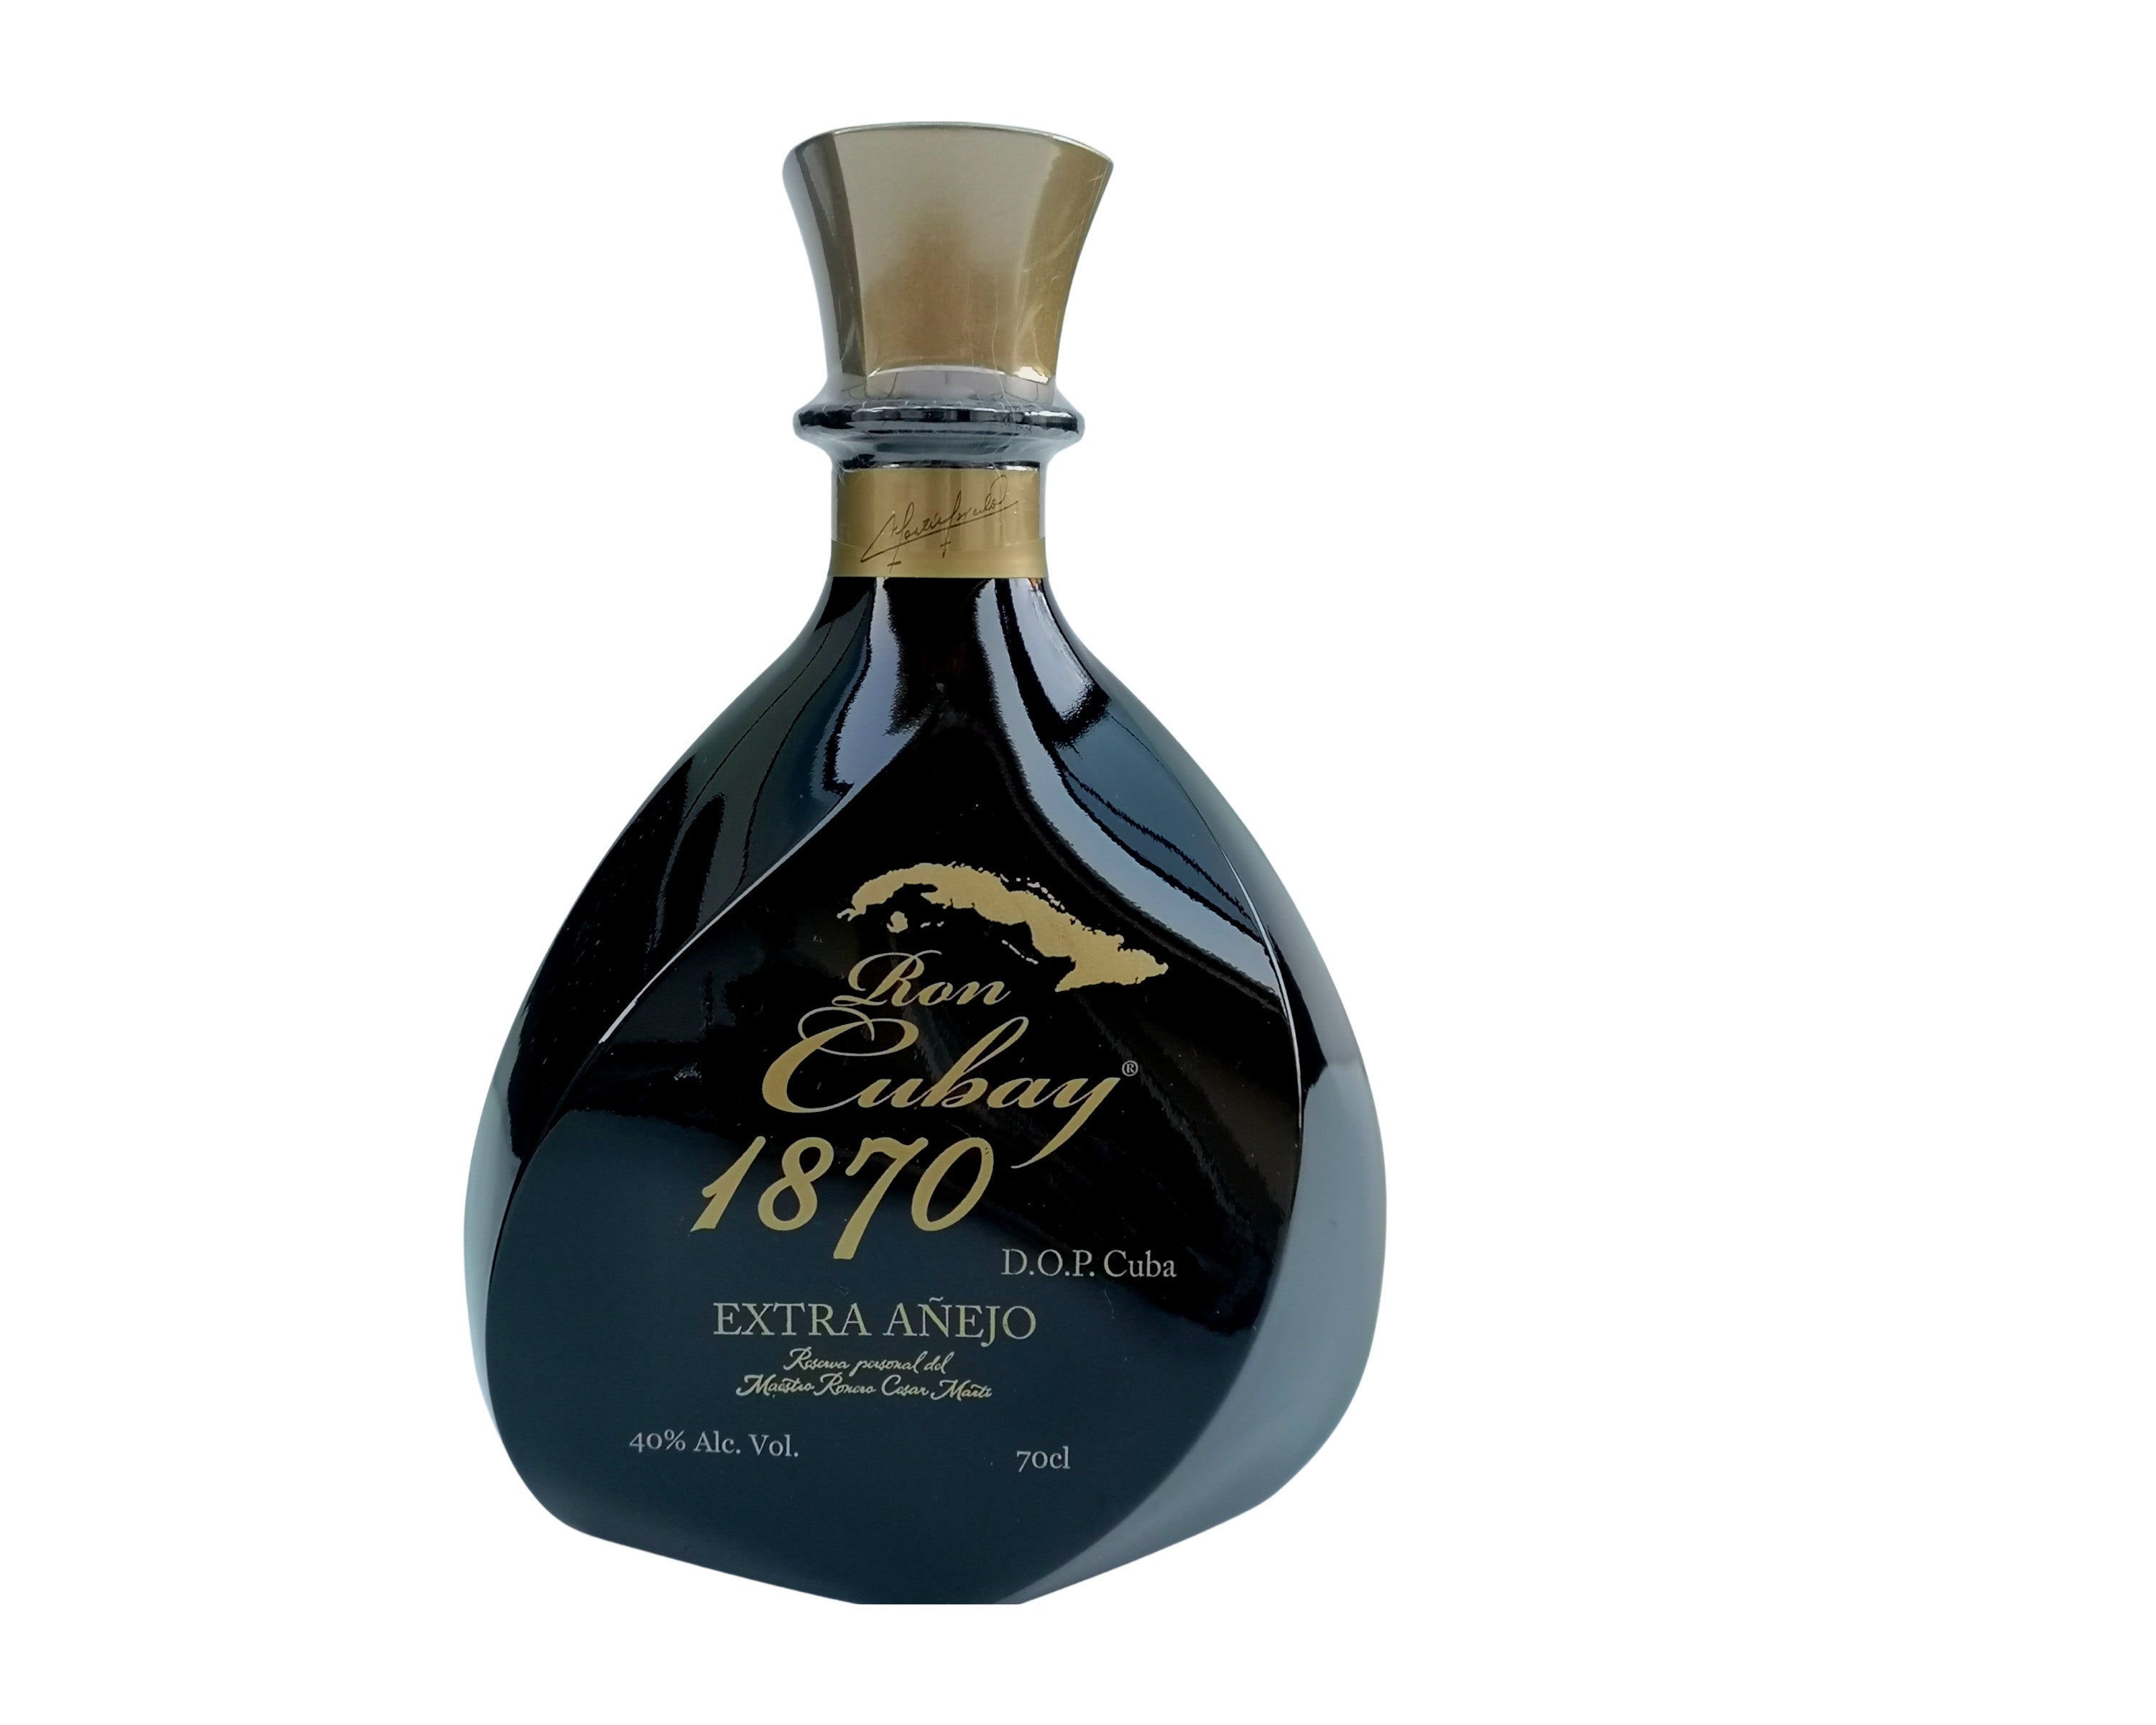 Rum cubano extra Añejo 1870